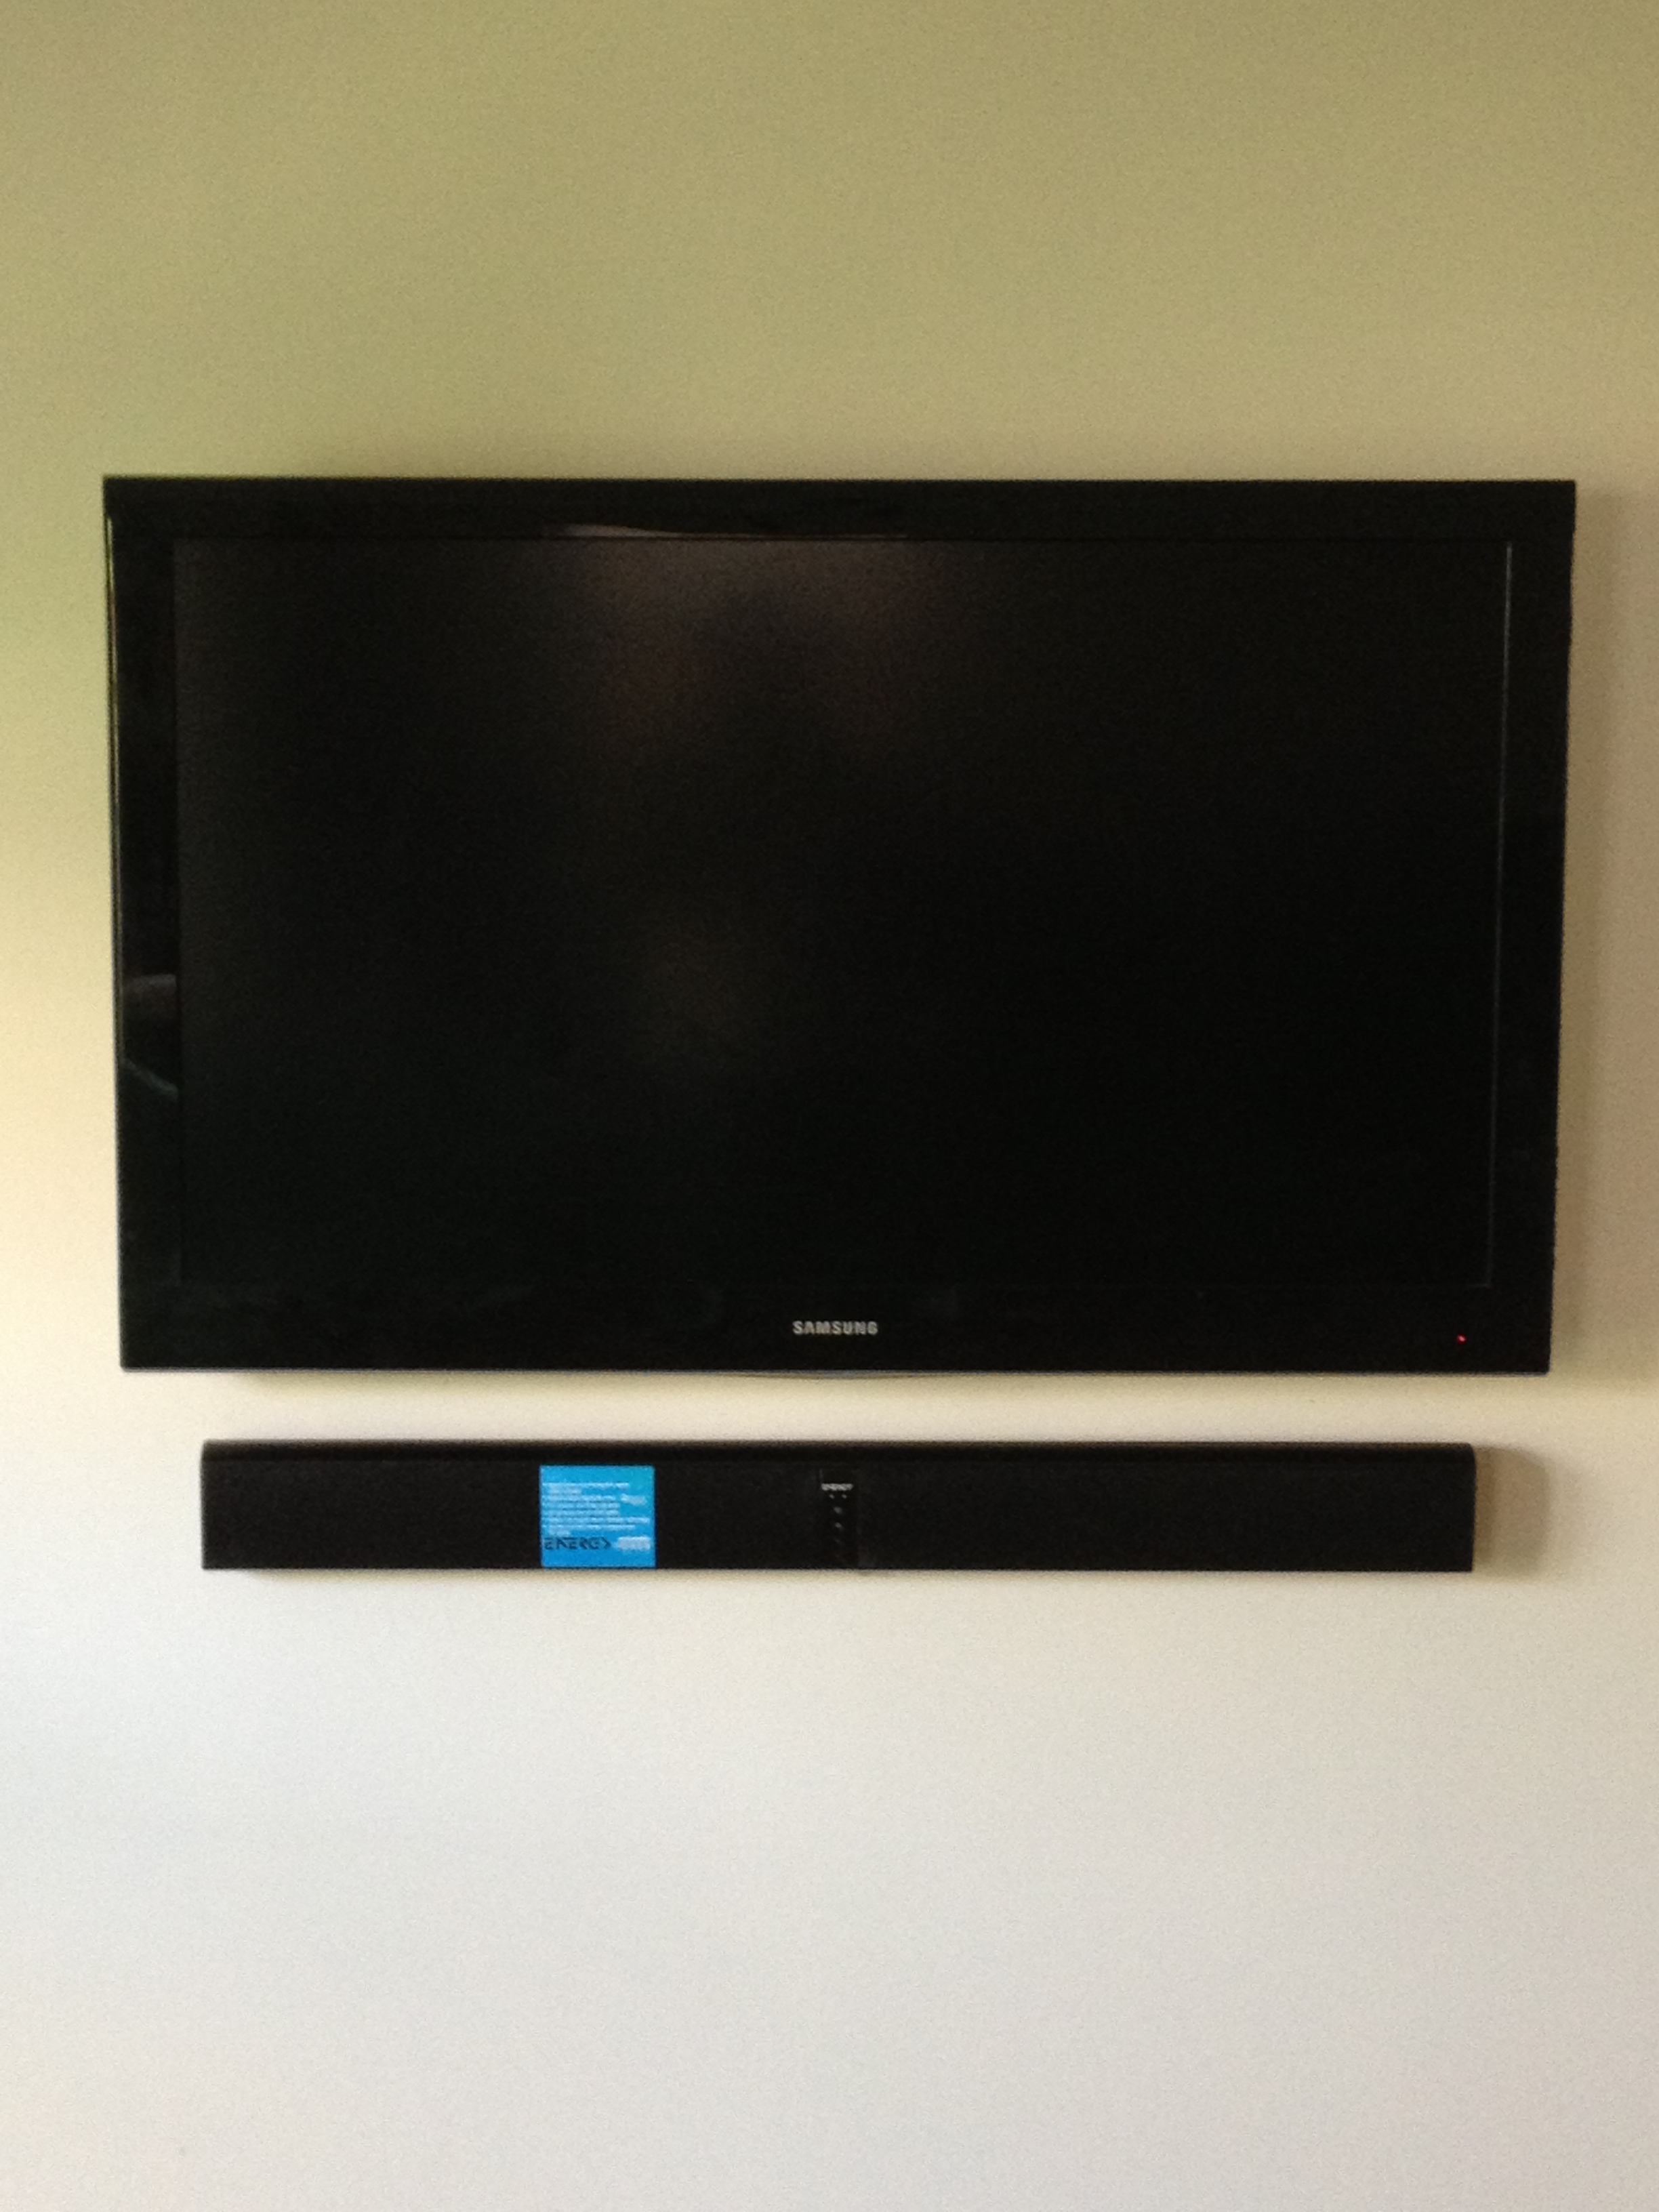 Flat screen tv installation